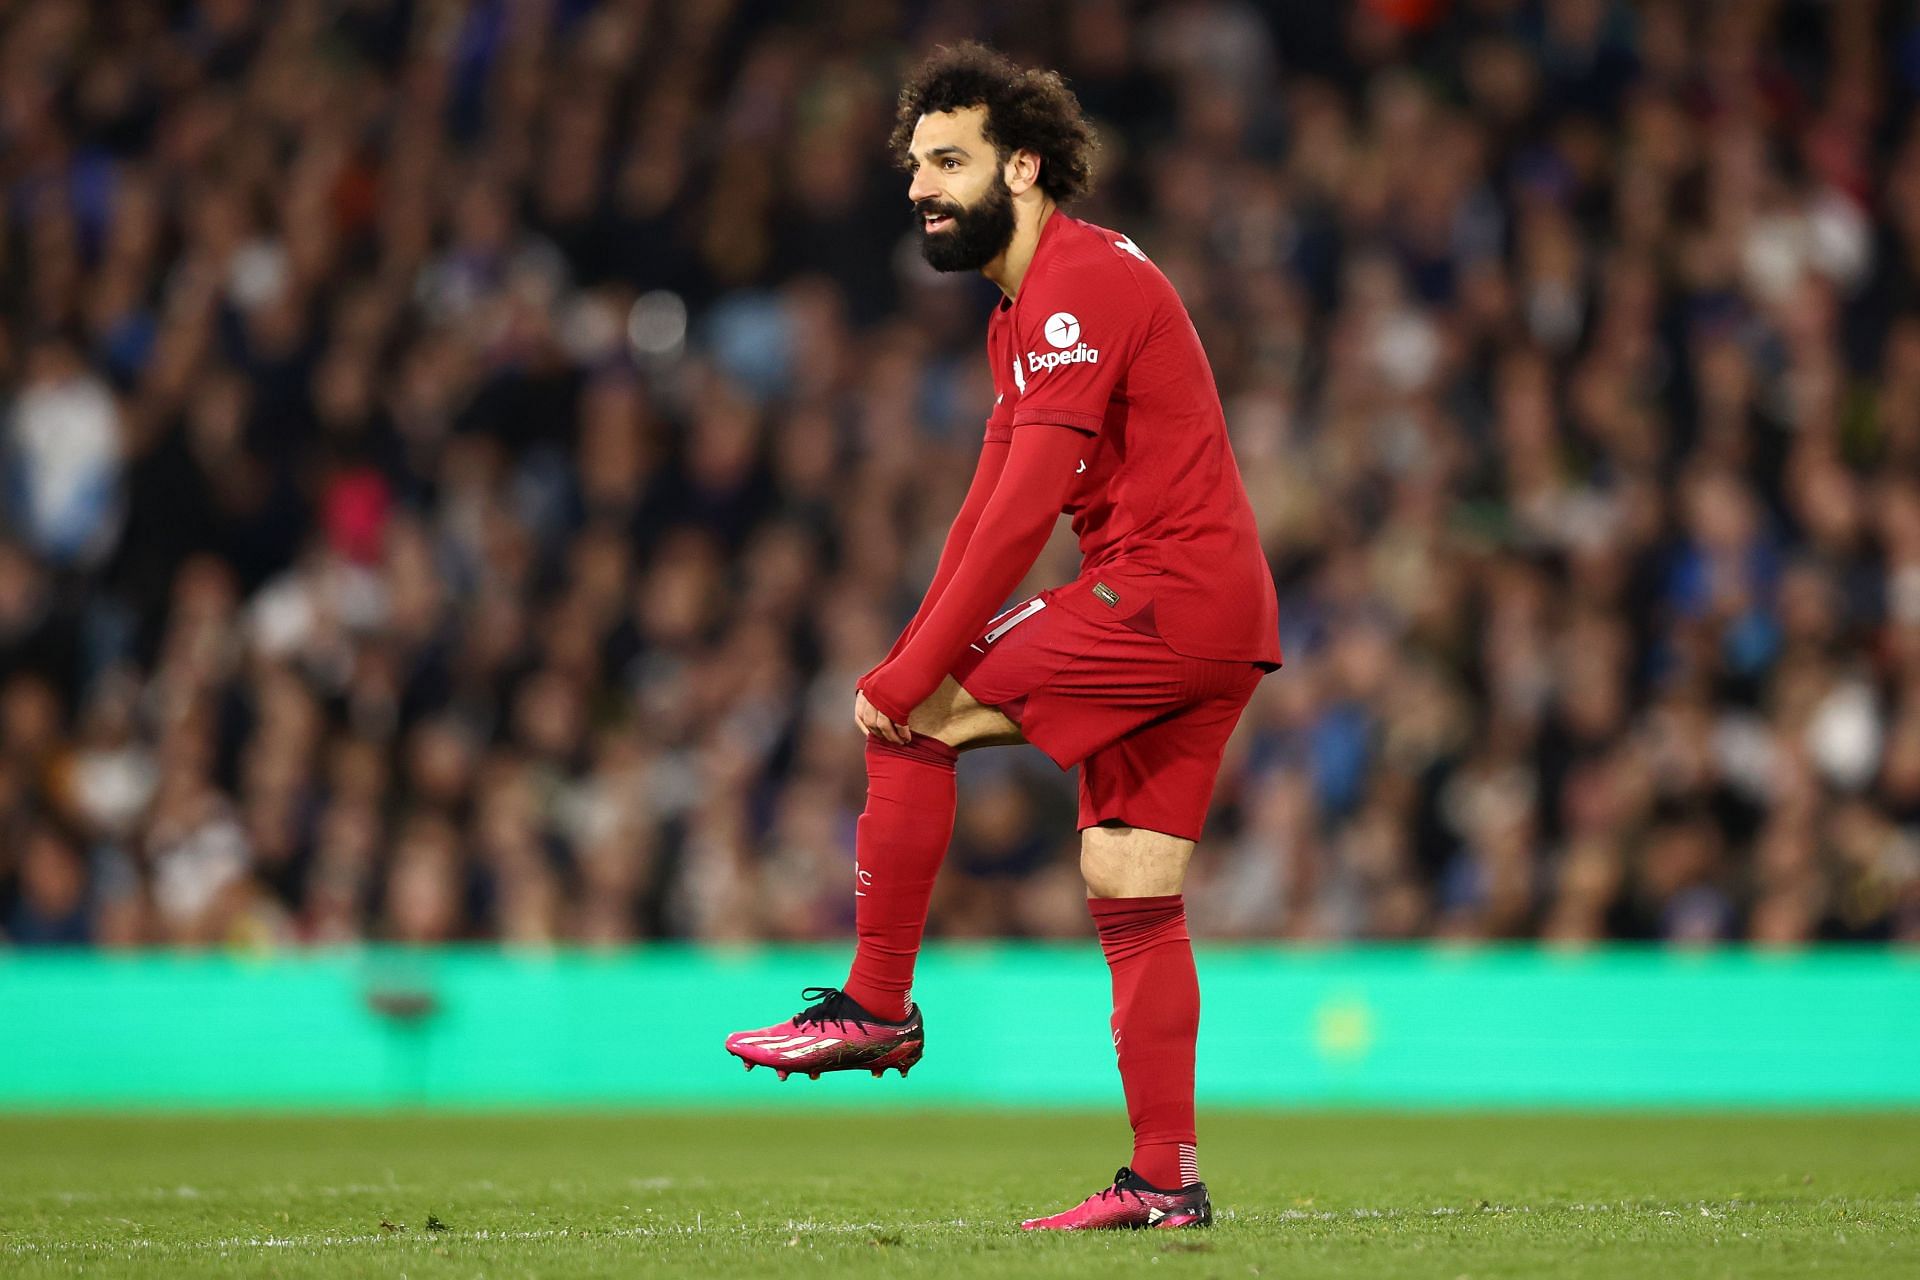 Salah emphatically buried his penalty